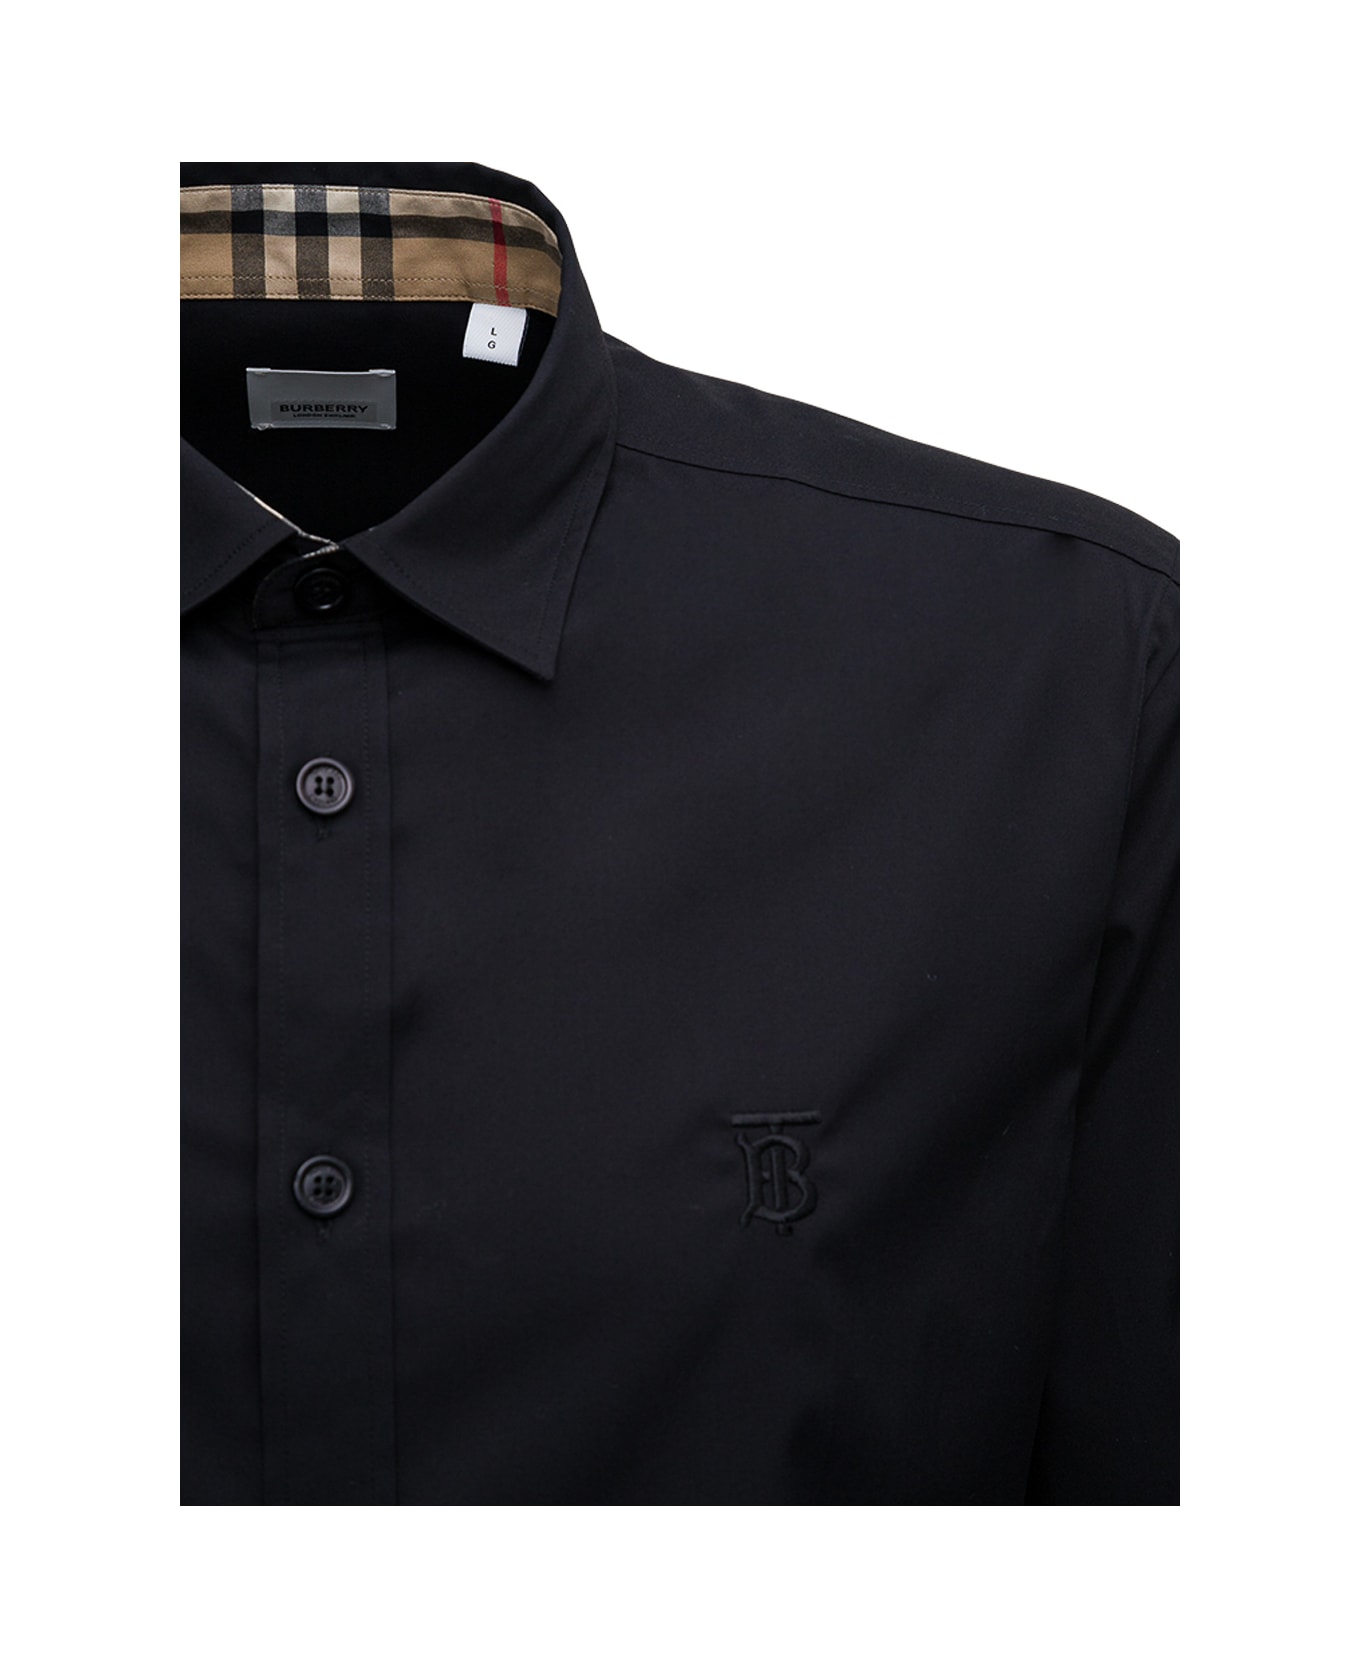 Burberry Man's Black Cotton Polin Shirt With Logo - Black